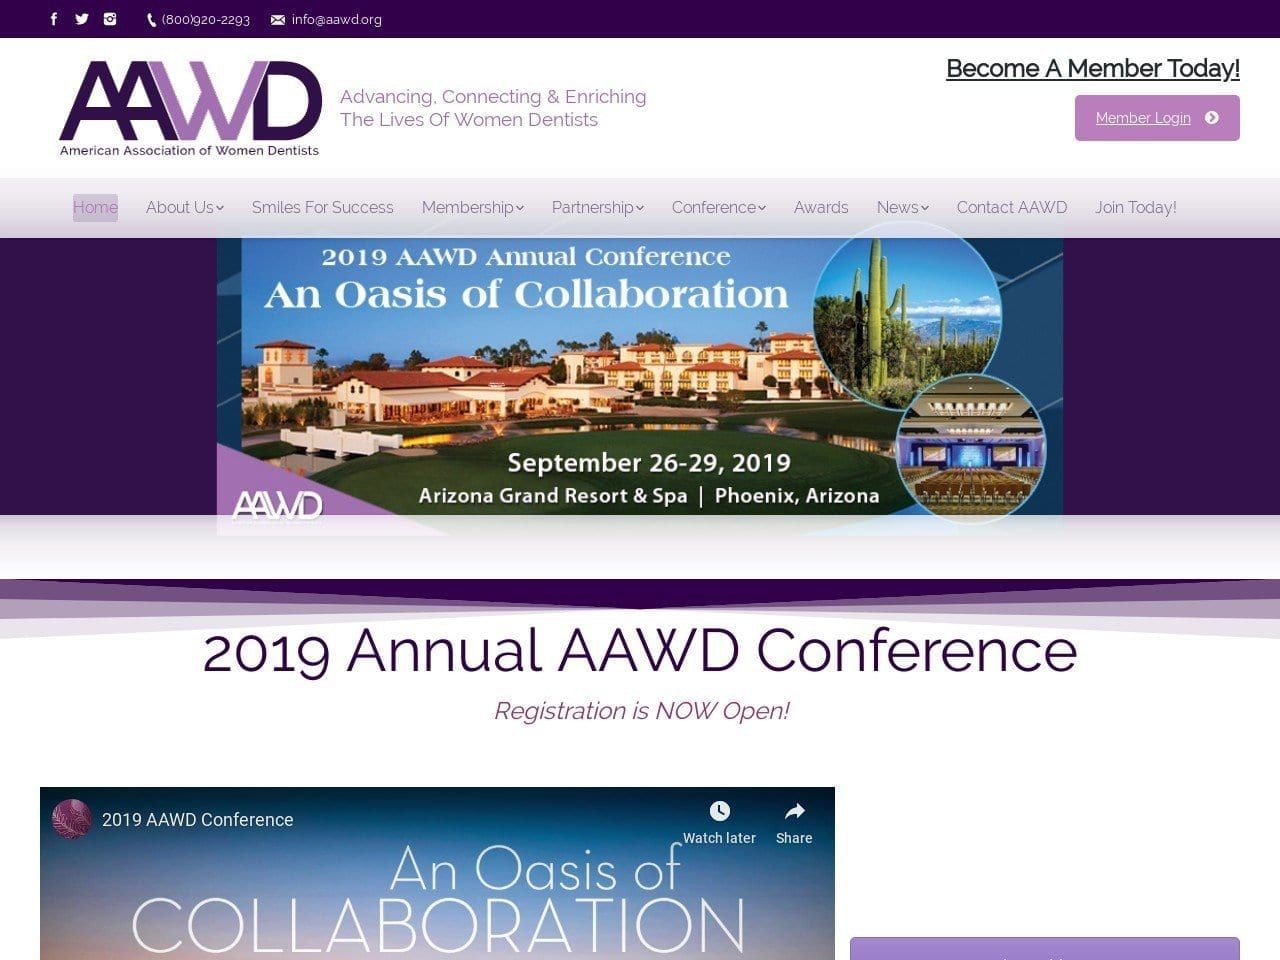 American Association Website Screenshot from aawd.org